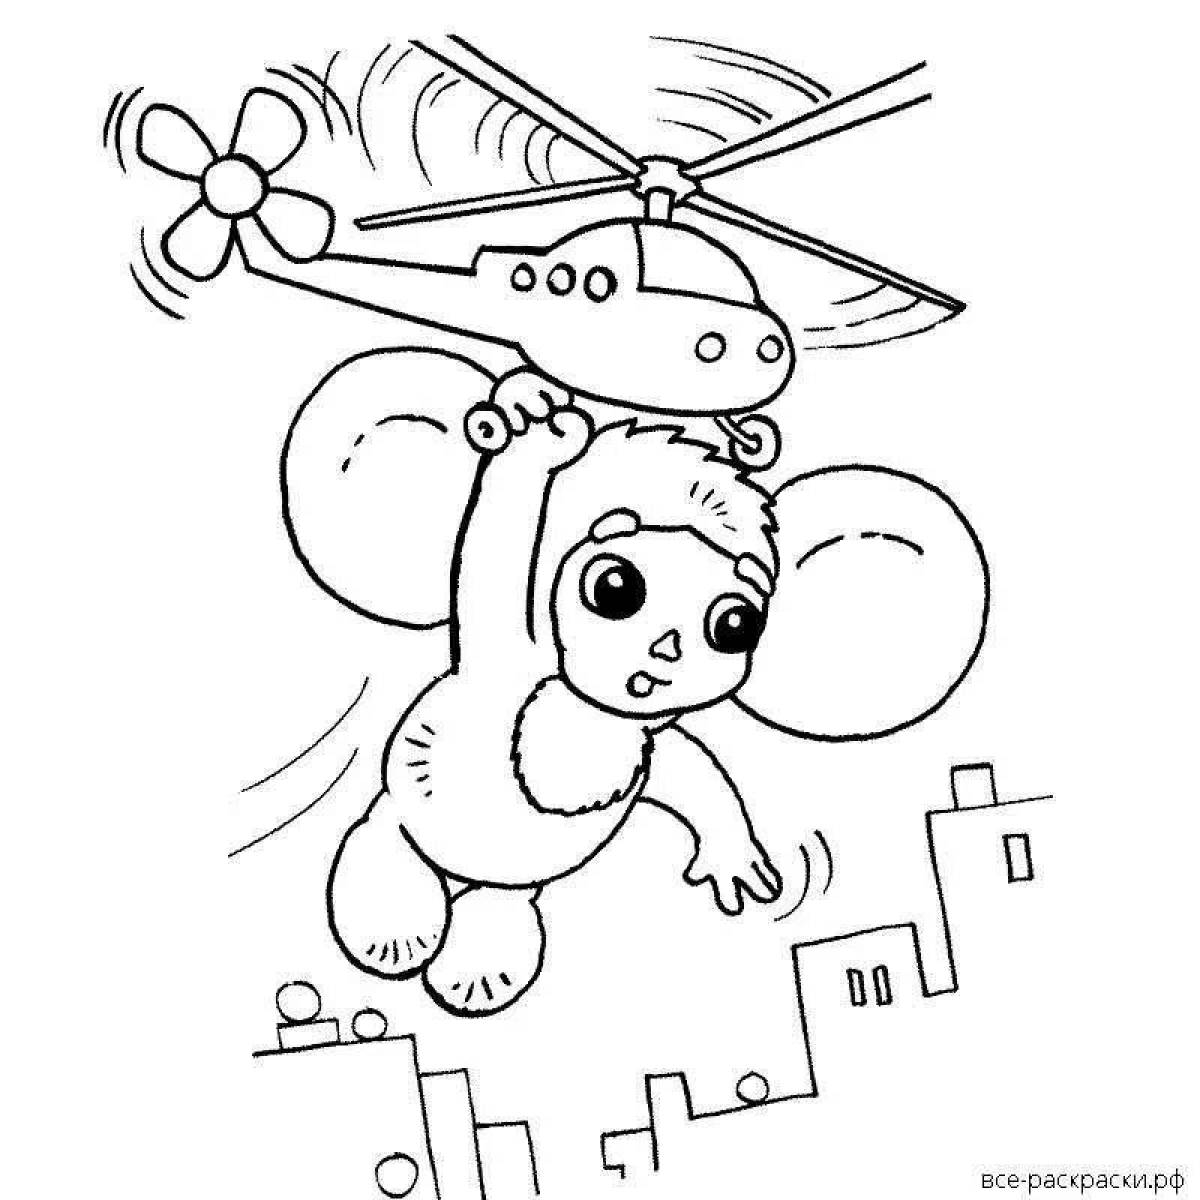 Delightful Cheburashka coloring book for children 5-6 years old